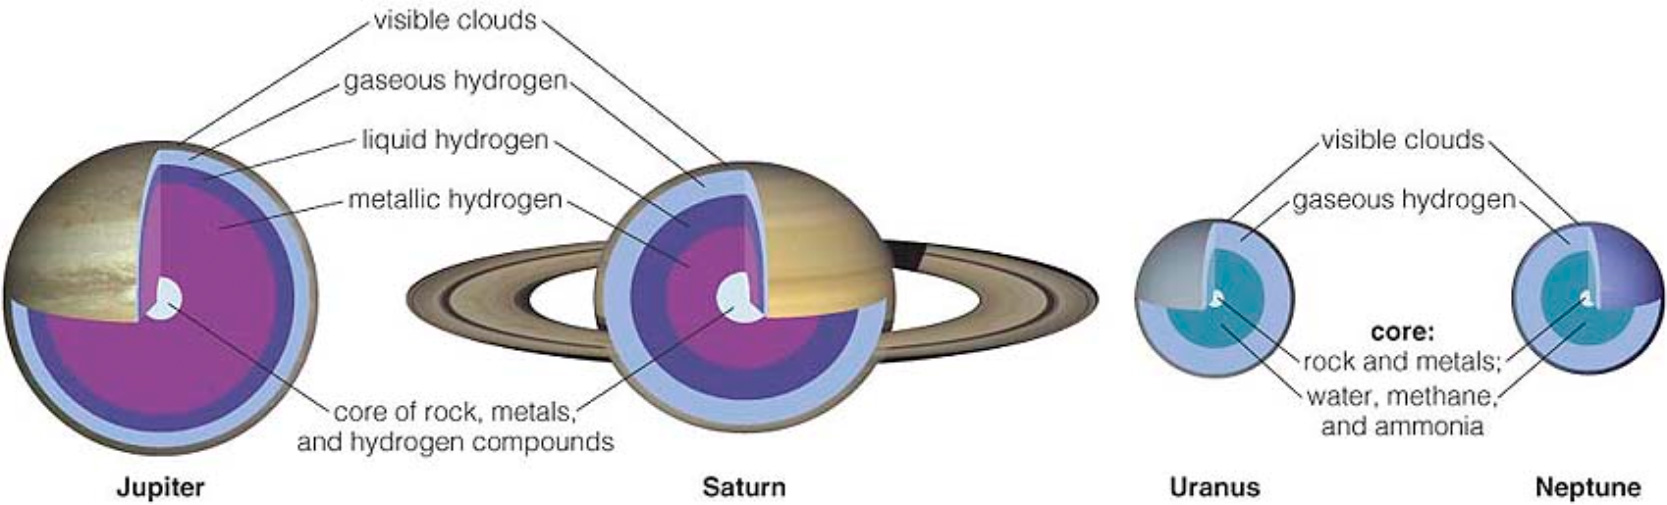 structure of planet jupiter